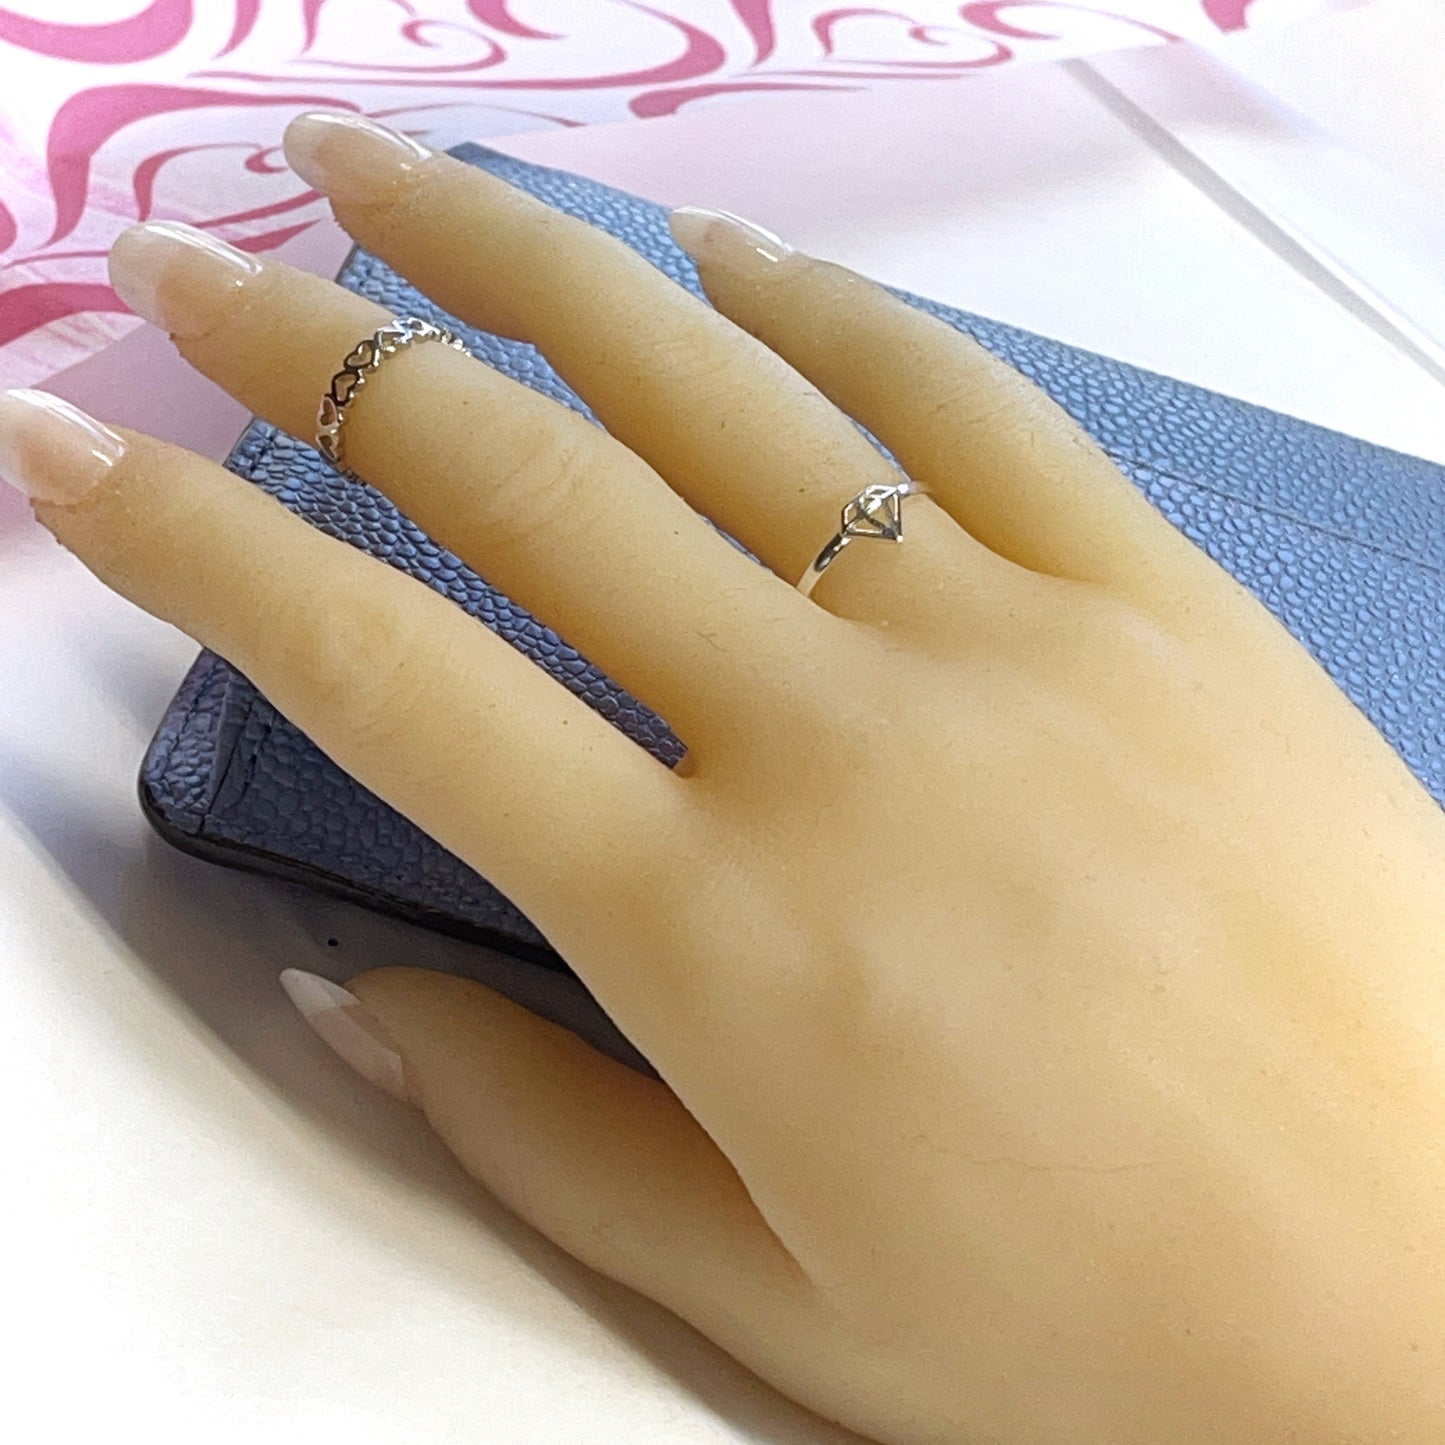 Un-diamond Silver Ring